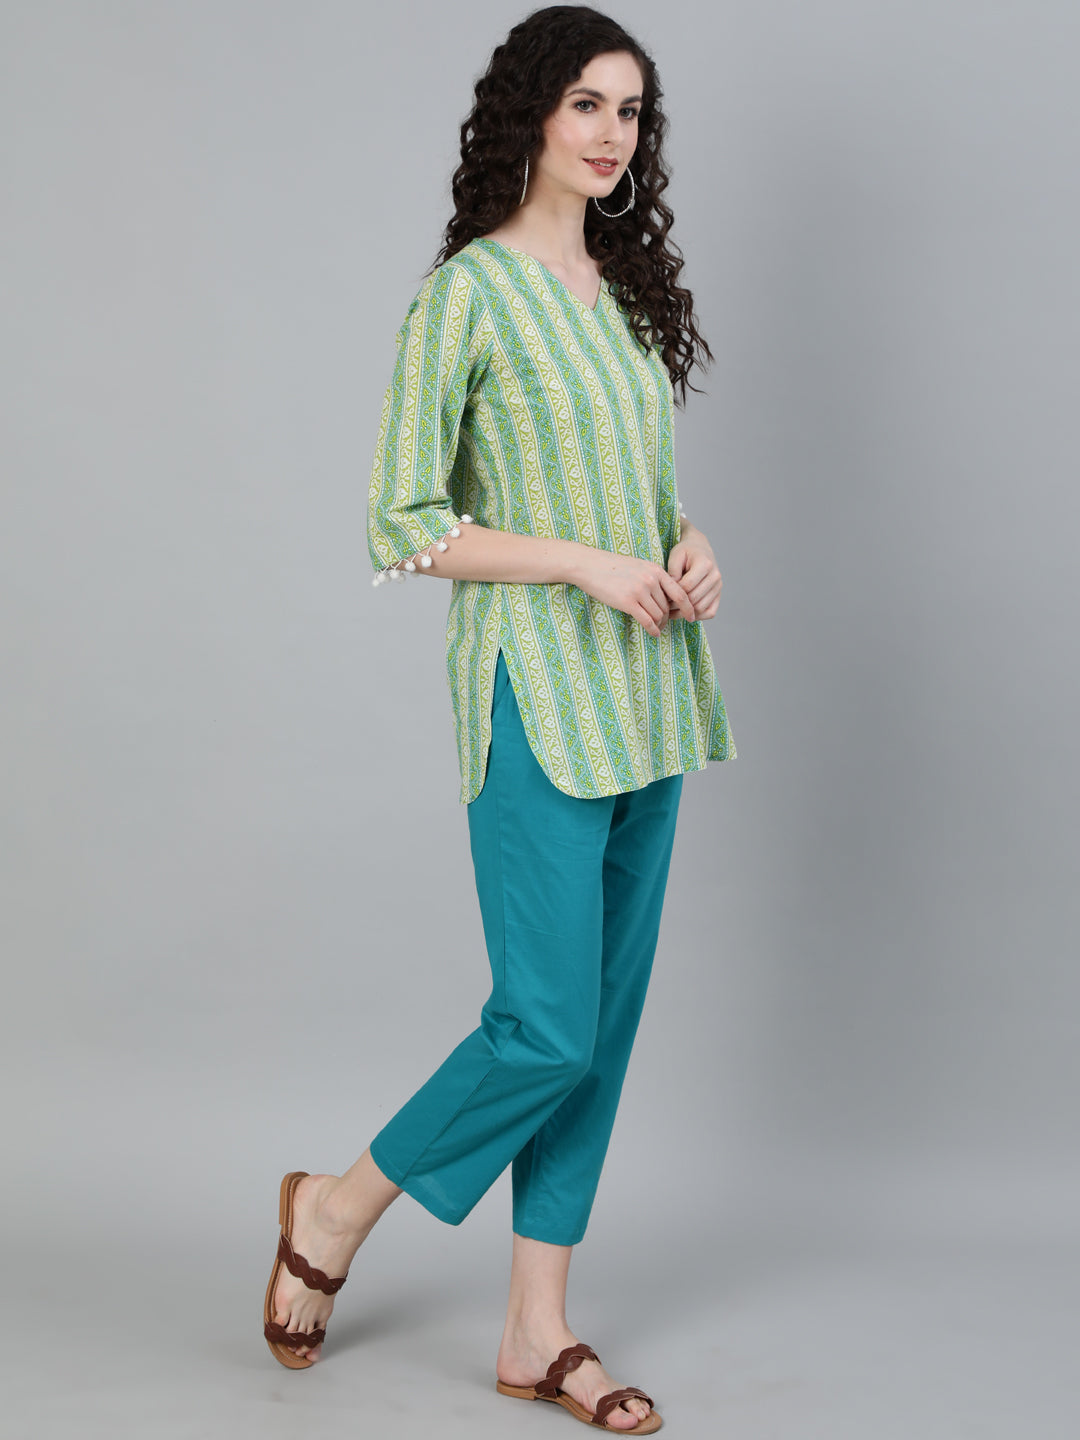 Green Colored Sleepwear Consists Of Short Kurta & Pajamas